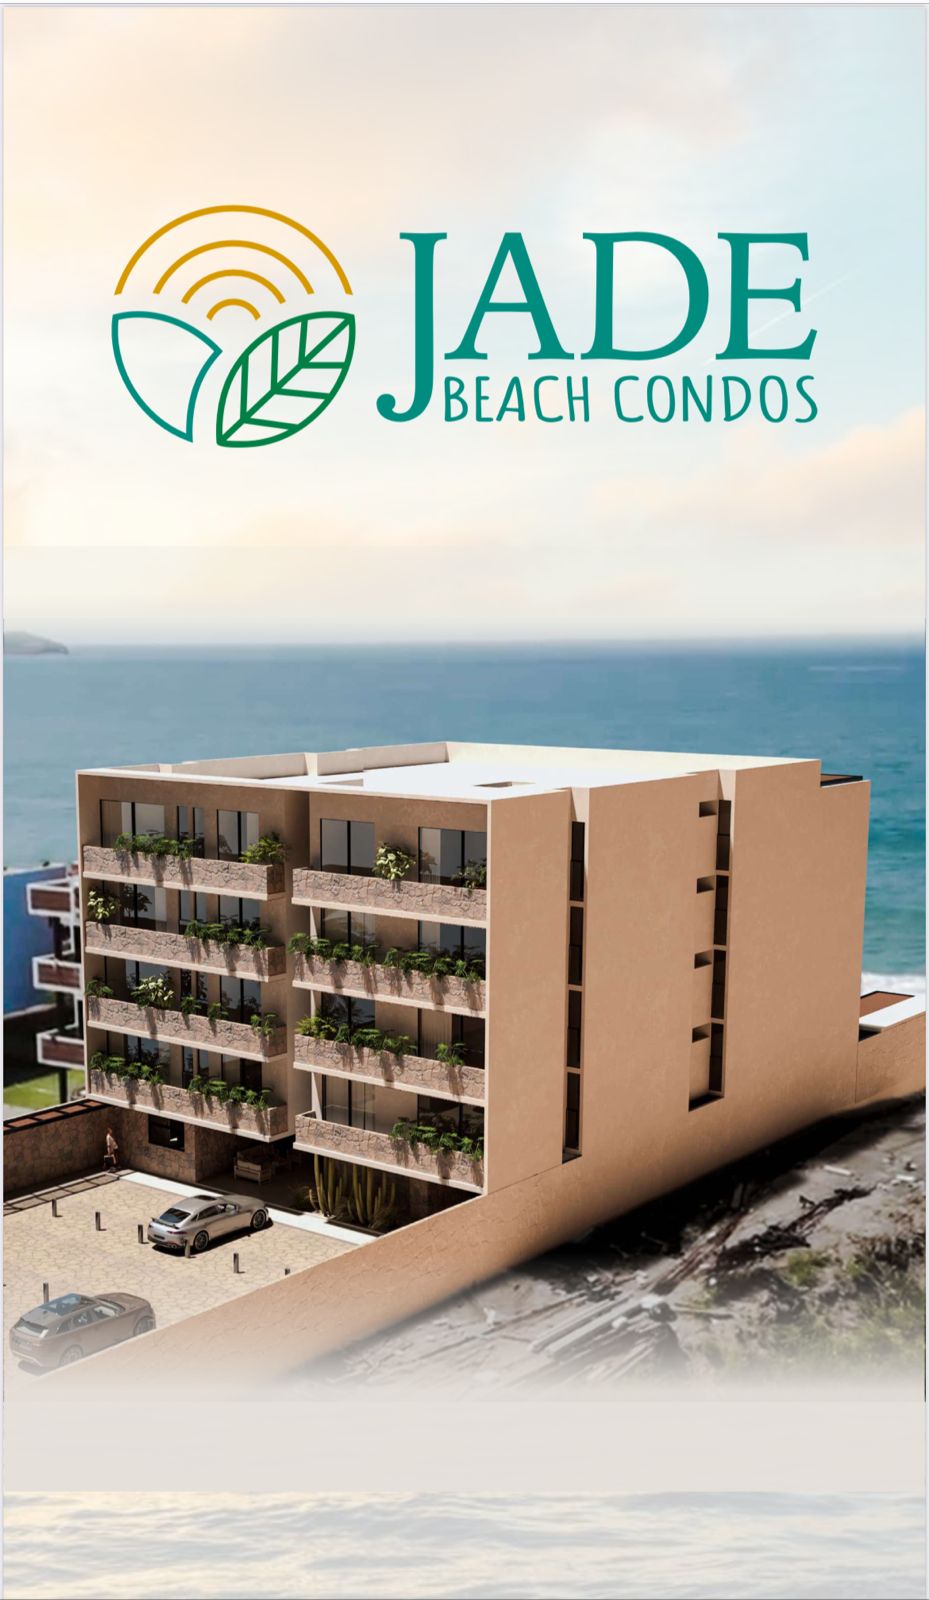 Departamentos en preventa en “Jade Beach Condos” en Mazatlán, Sinaloa.